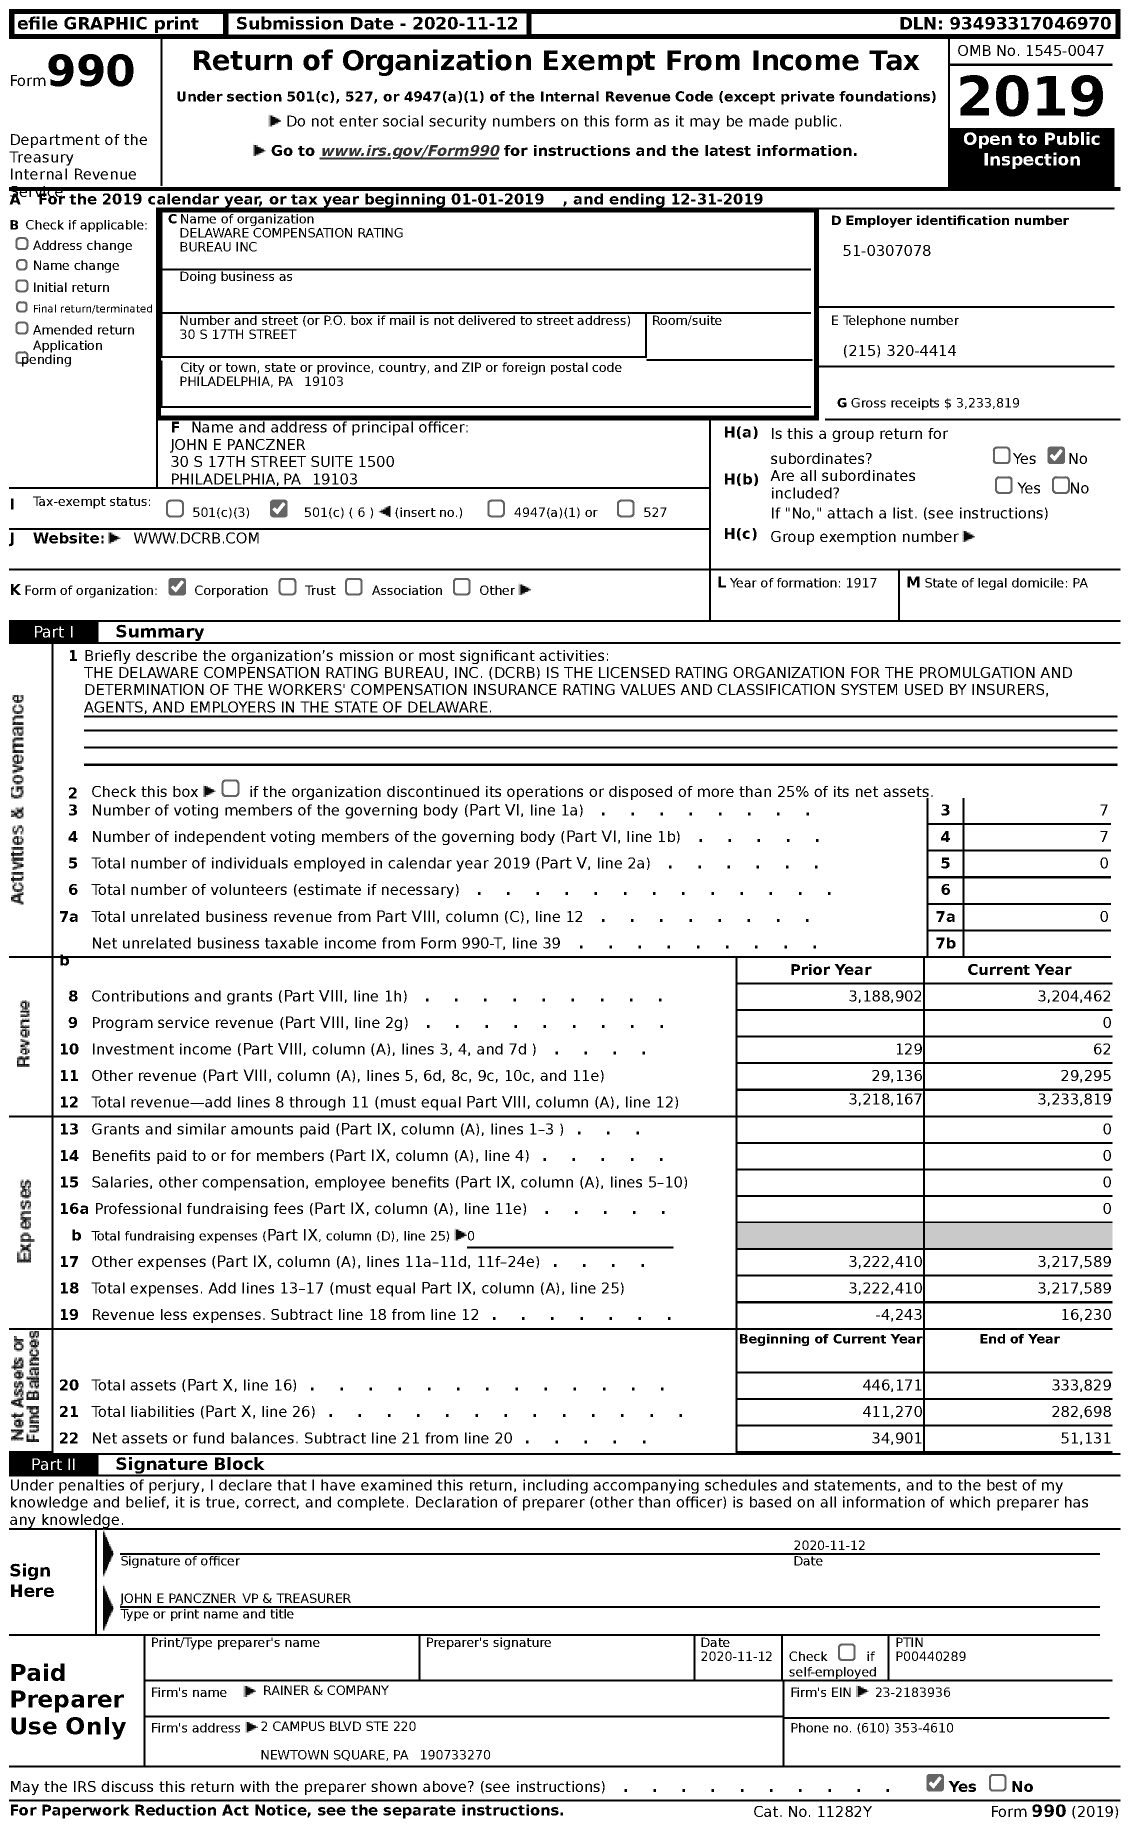 Image of first page of 2019 Form 990 for Delaware Compensation Rating Bureau (DCRB)